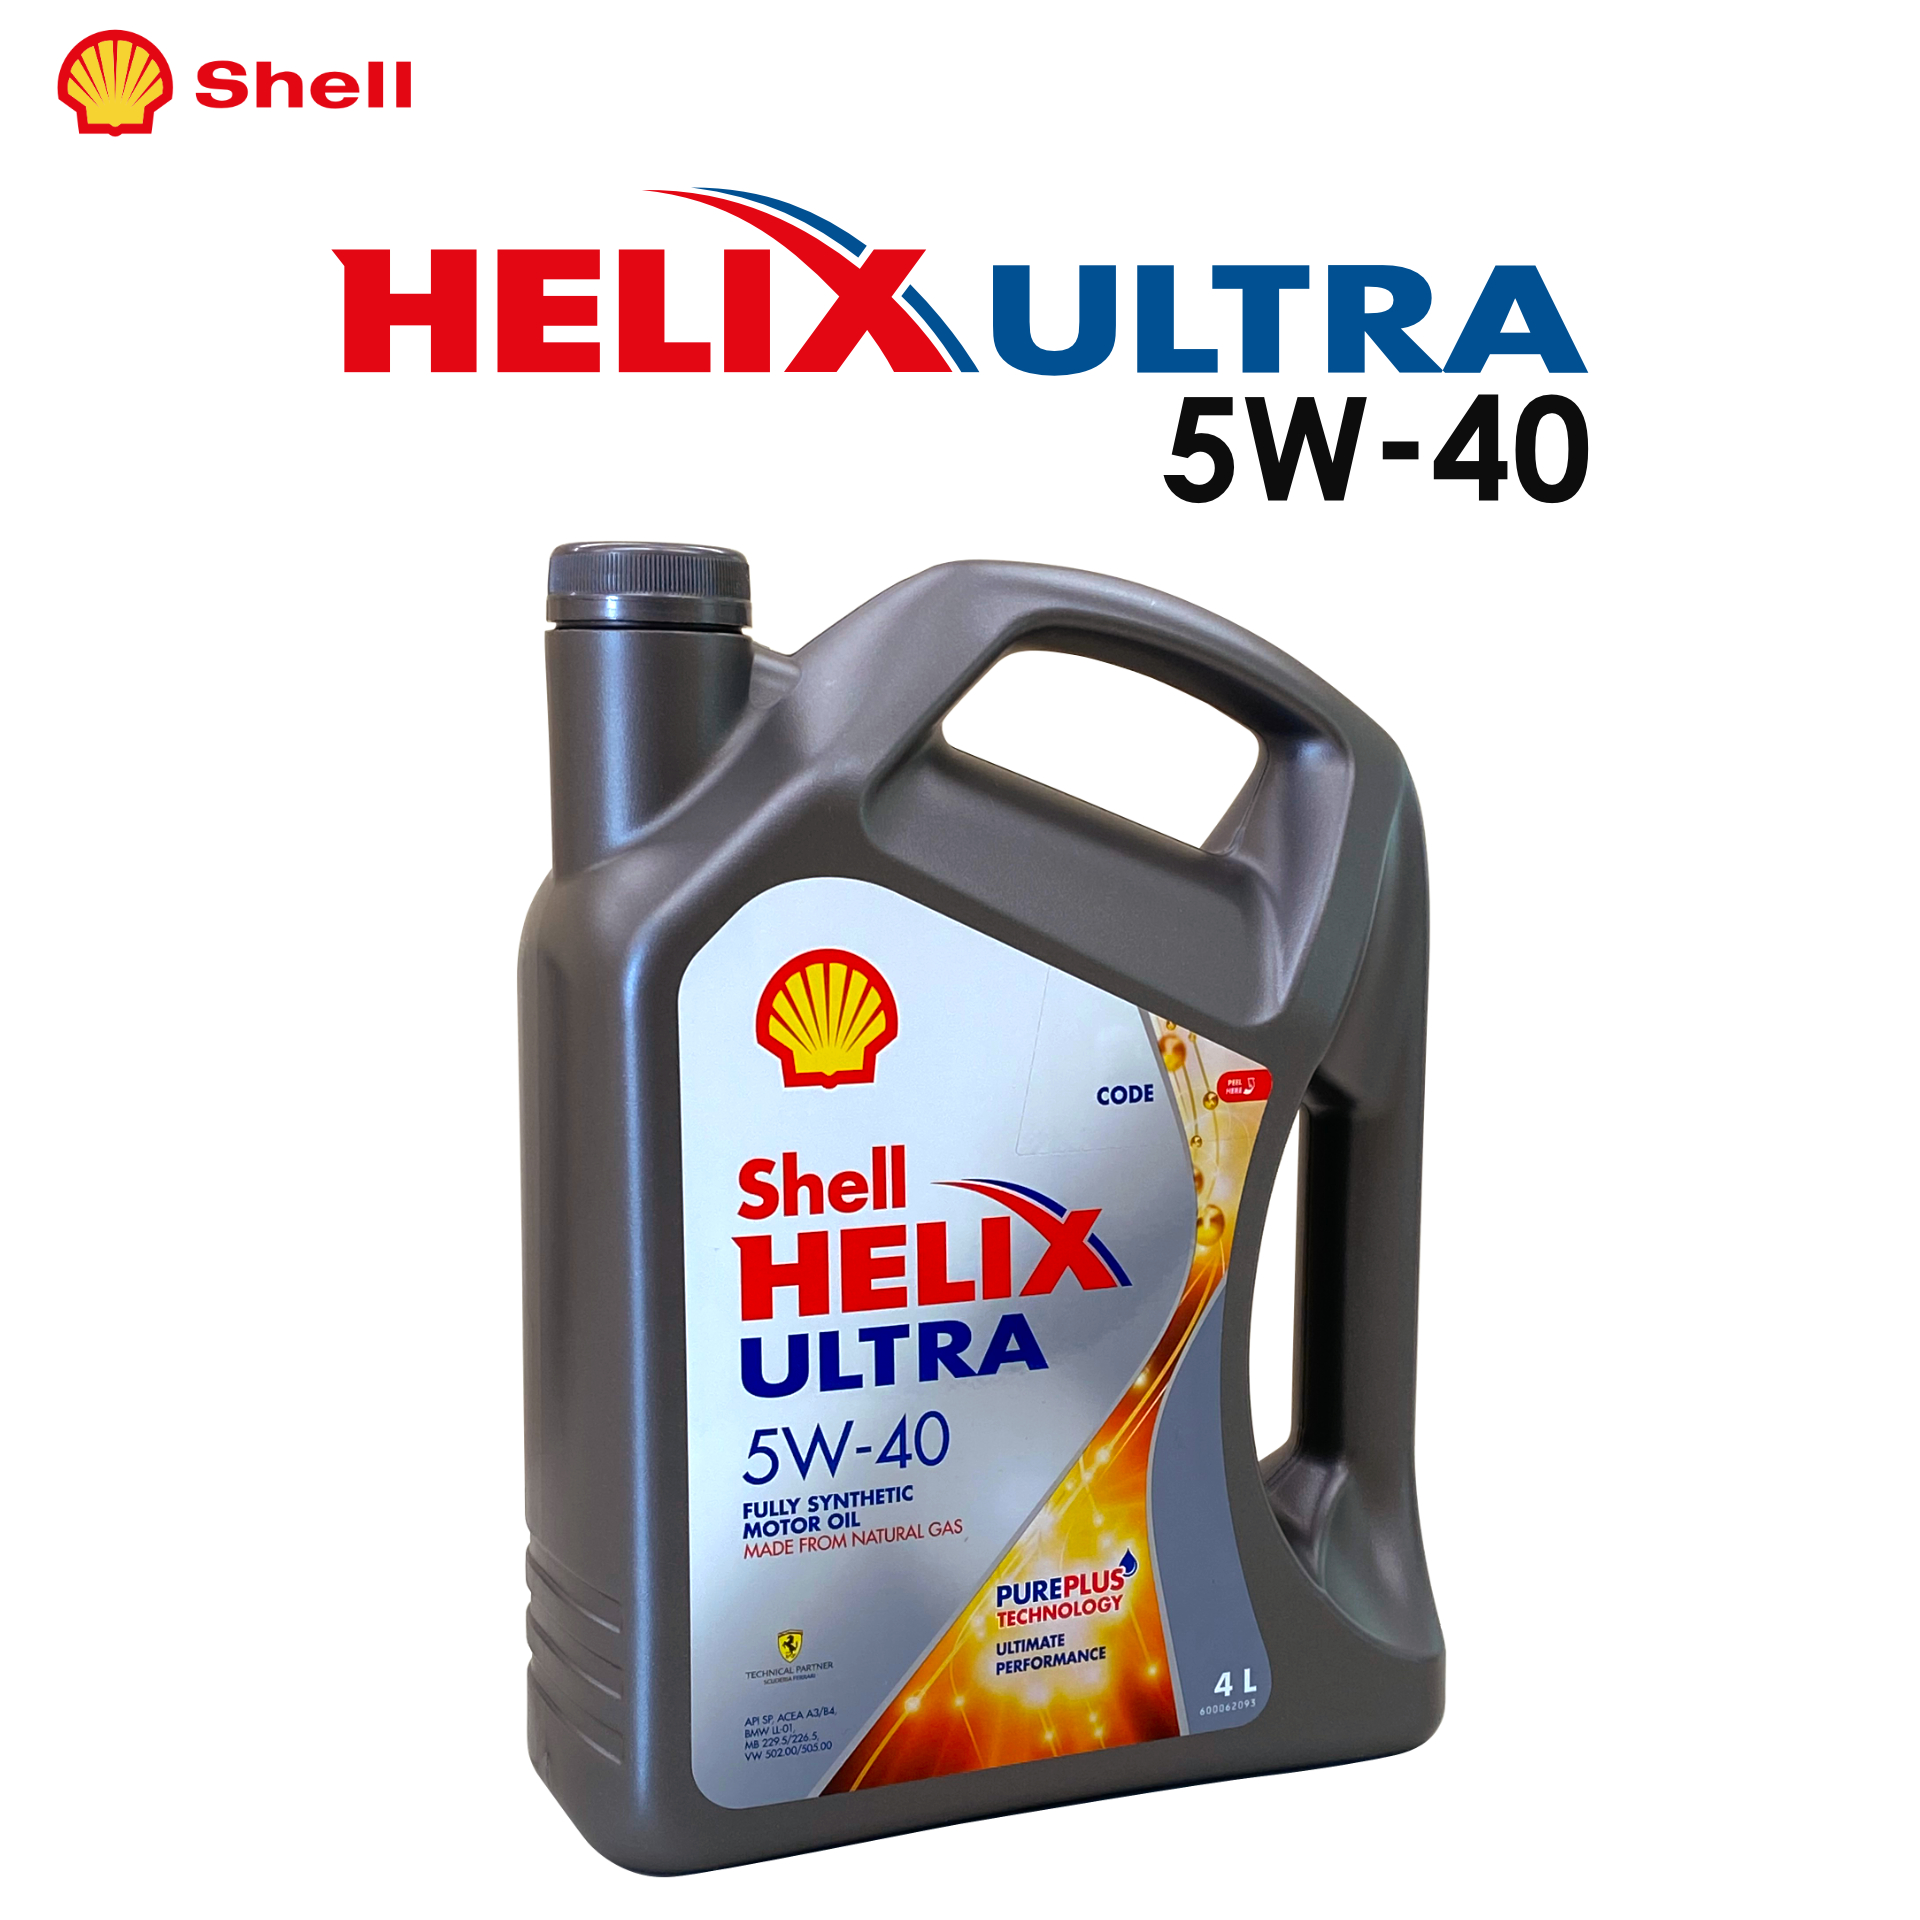 Shell HELIX ULTRA (シェル ヒリックス ウルトラ) 5W-40 4L エンジンオイル [並行輸入品]